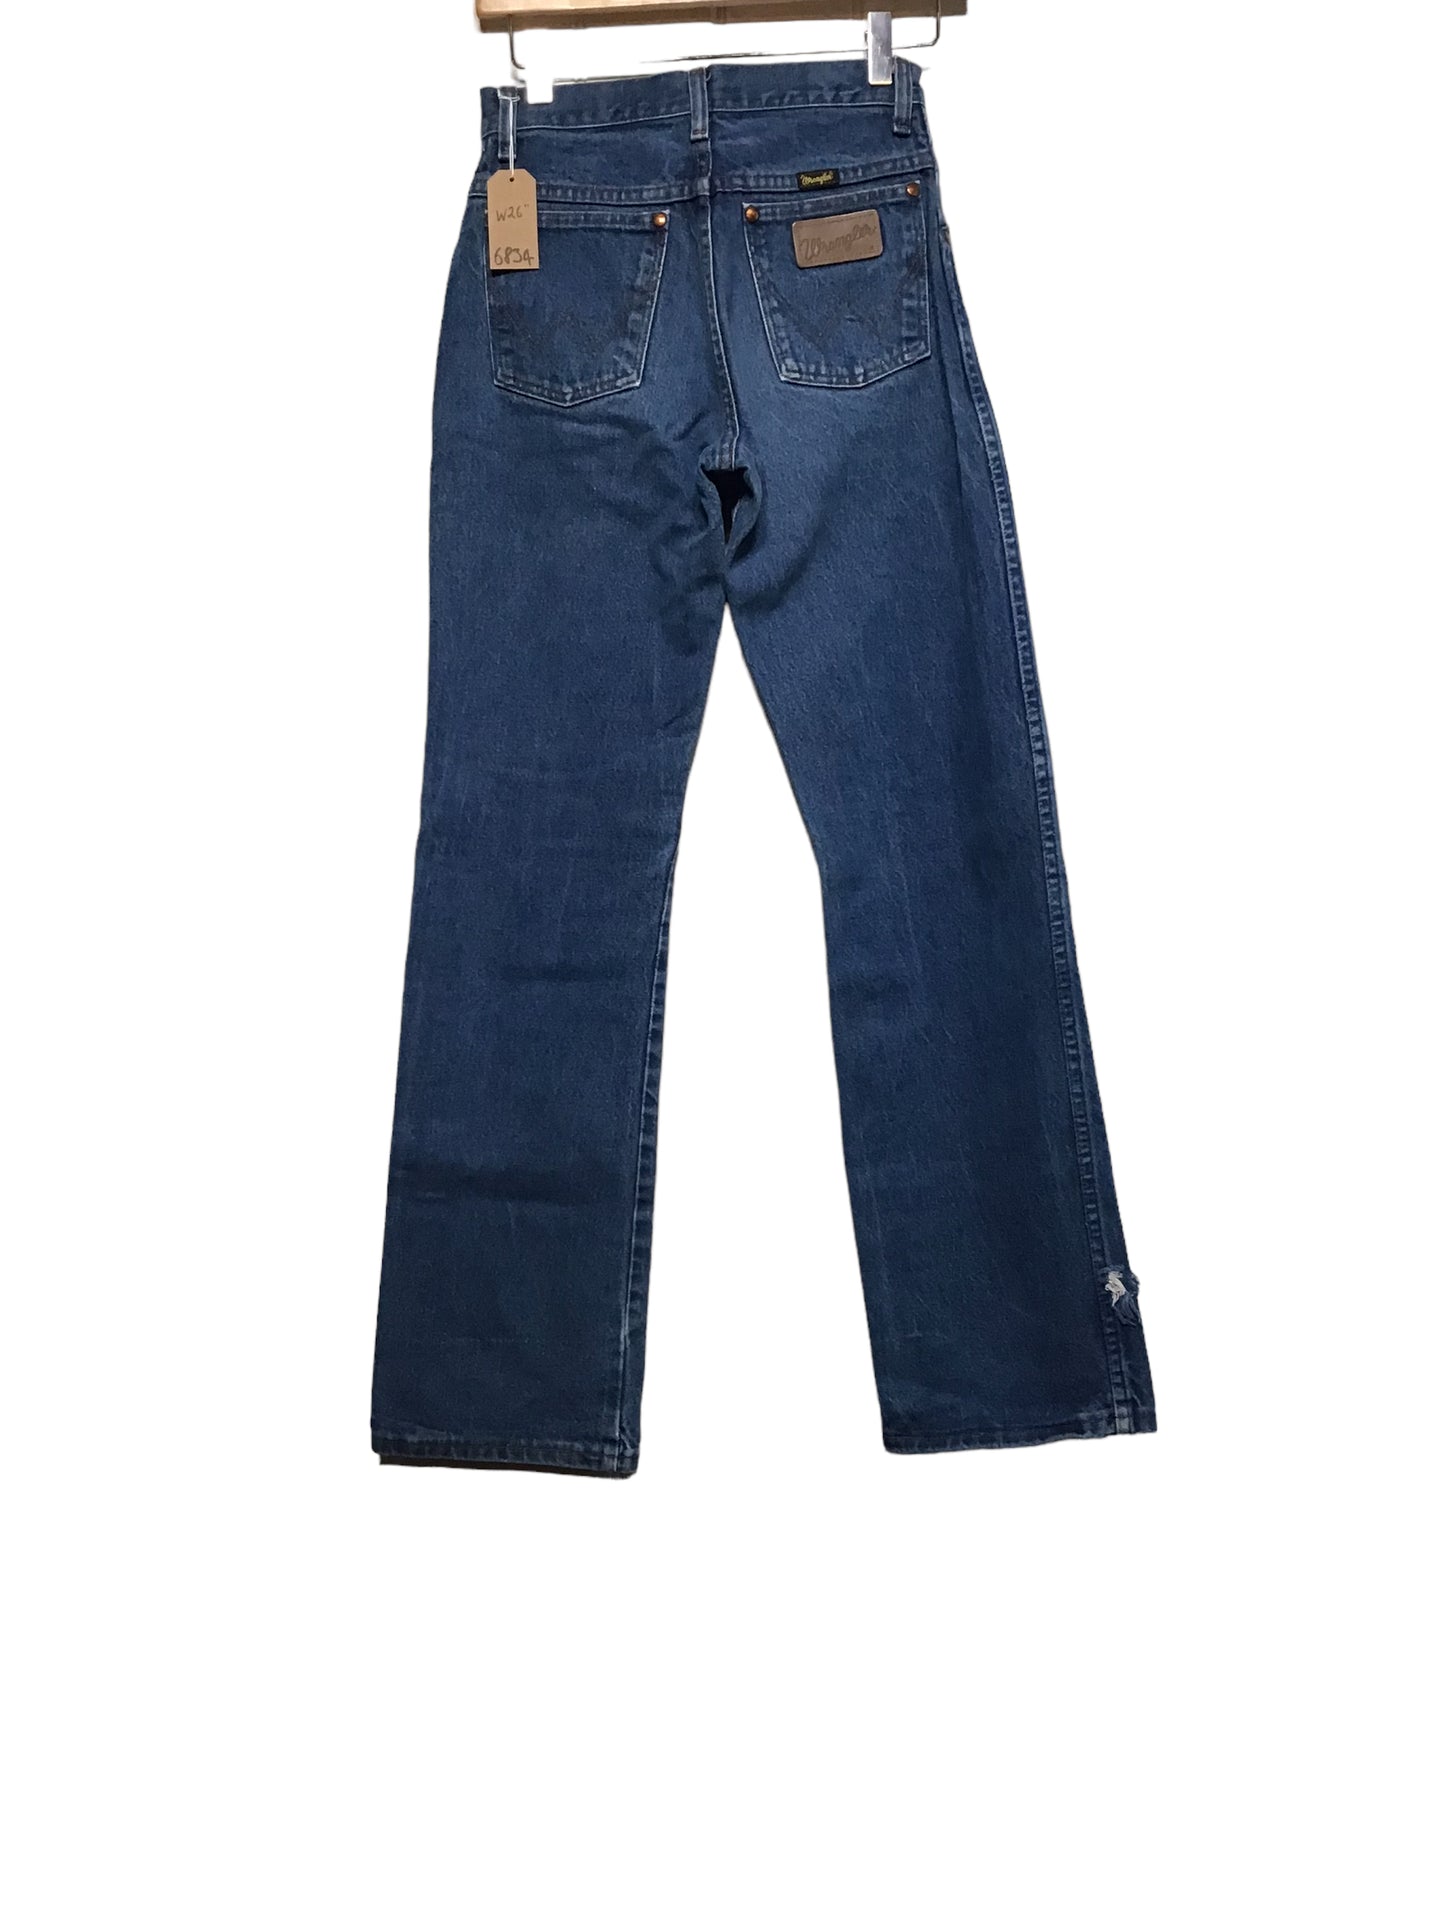 Wrangler Jeans (26x30)